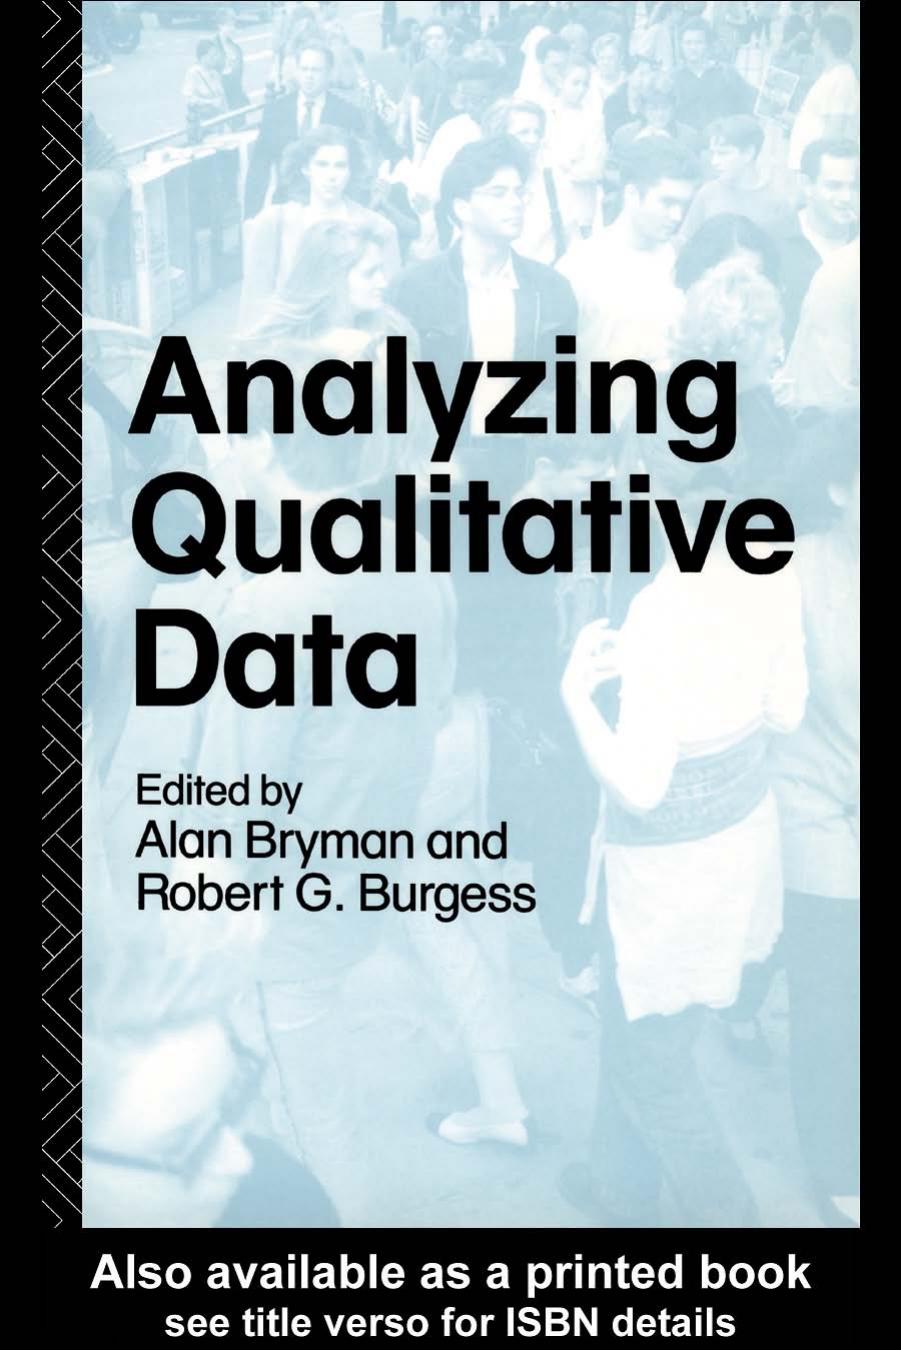 Analyzing qualitative data 1994